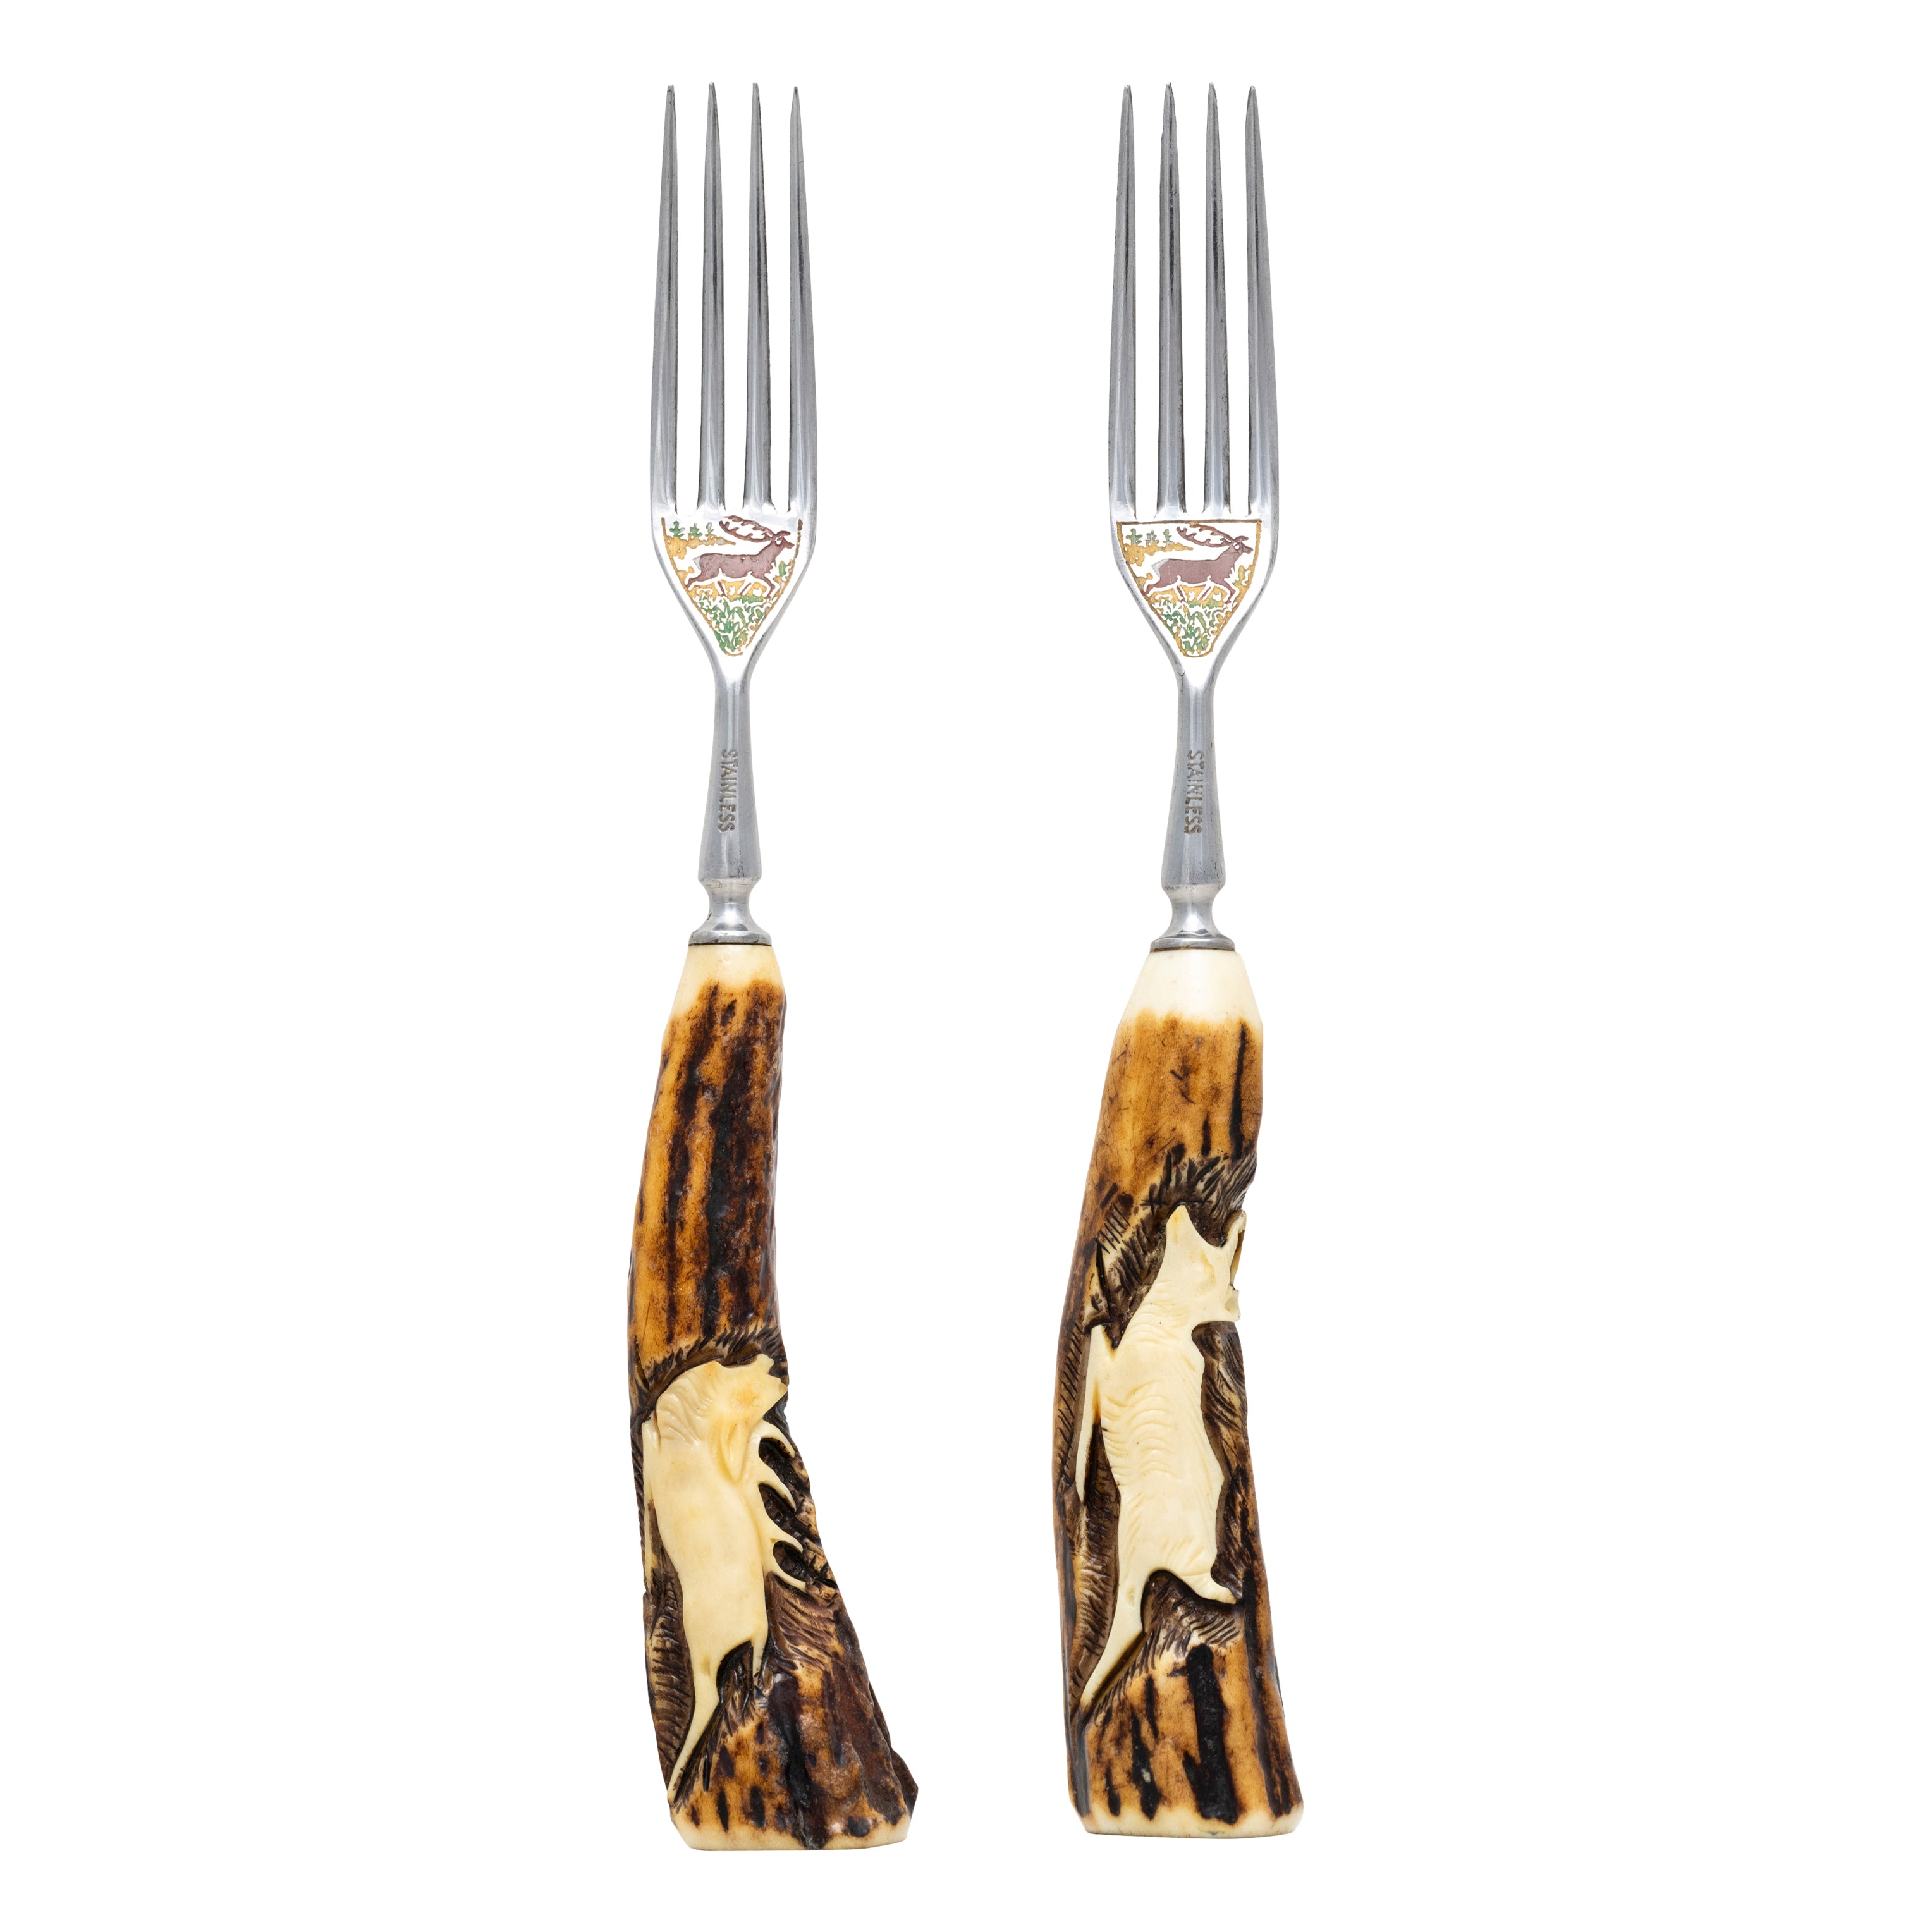 Vintage Soligen Carving Cutlery Set